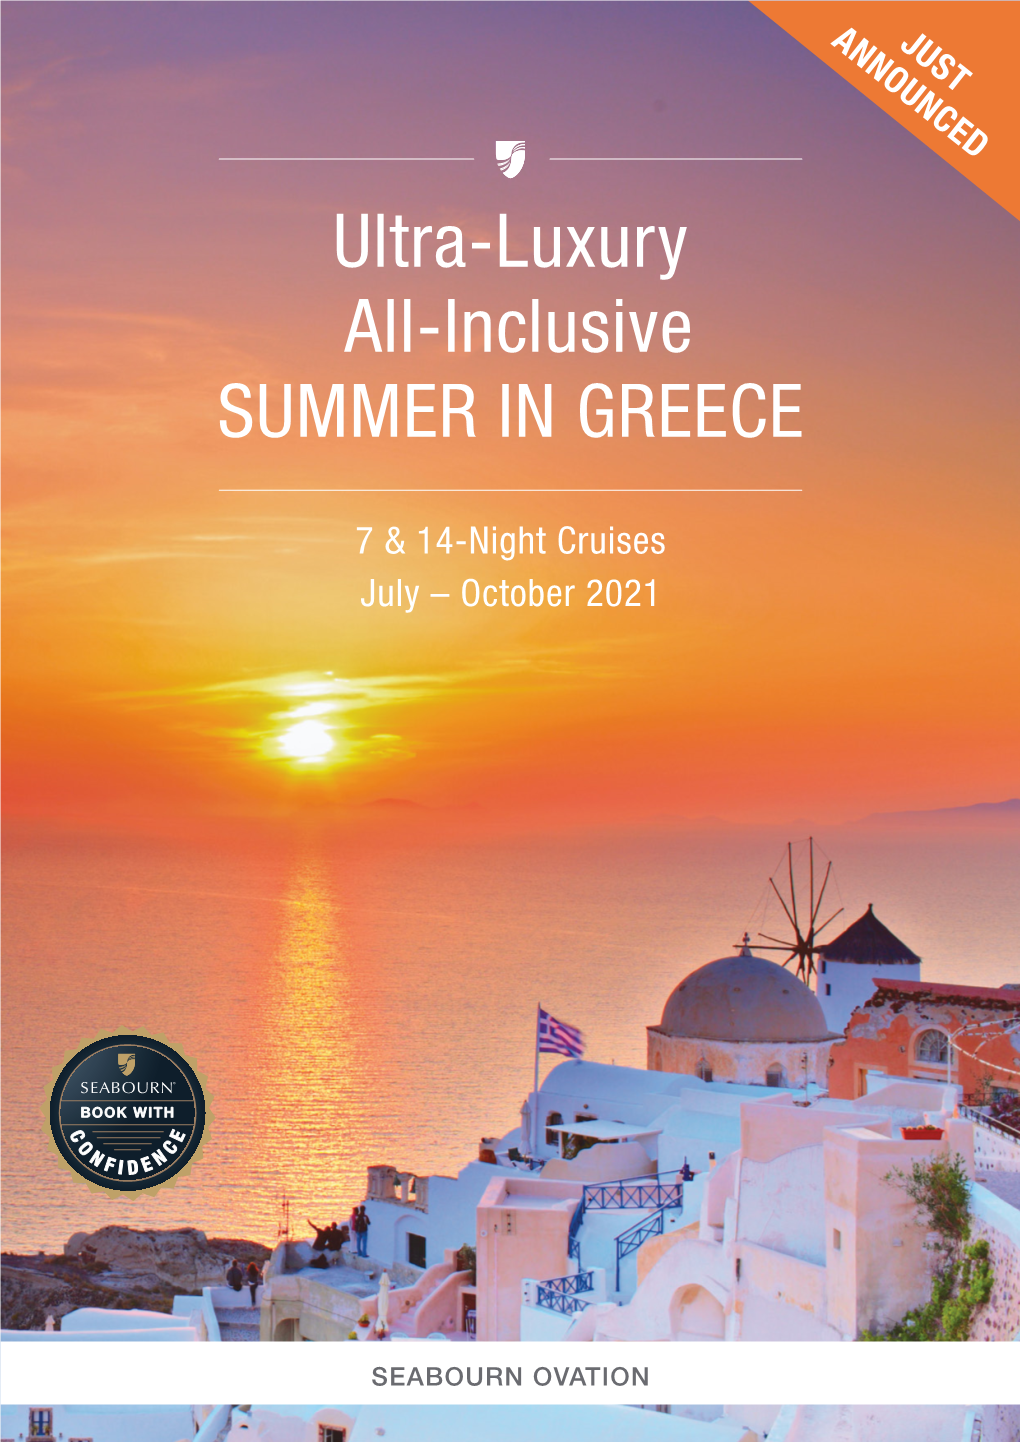 Ultra-Luxury All-Inclusive SUMMER in GREECE